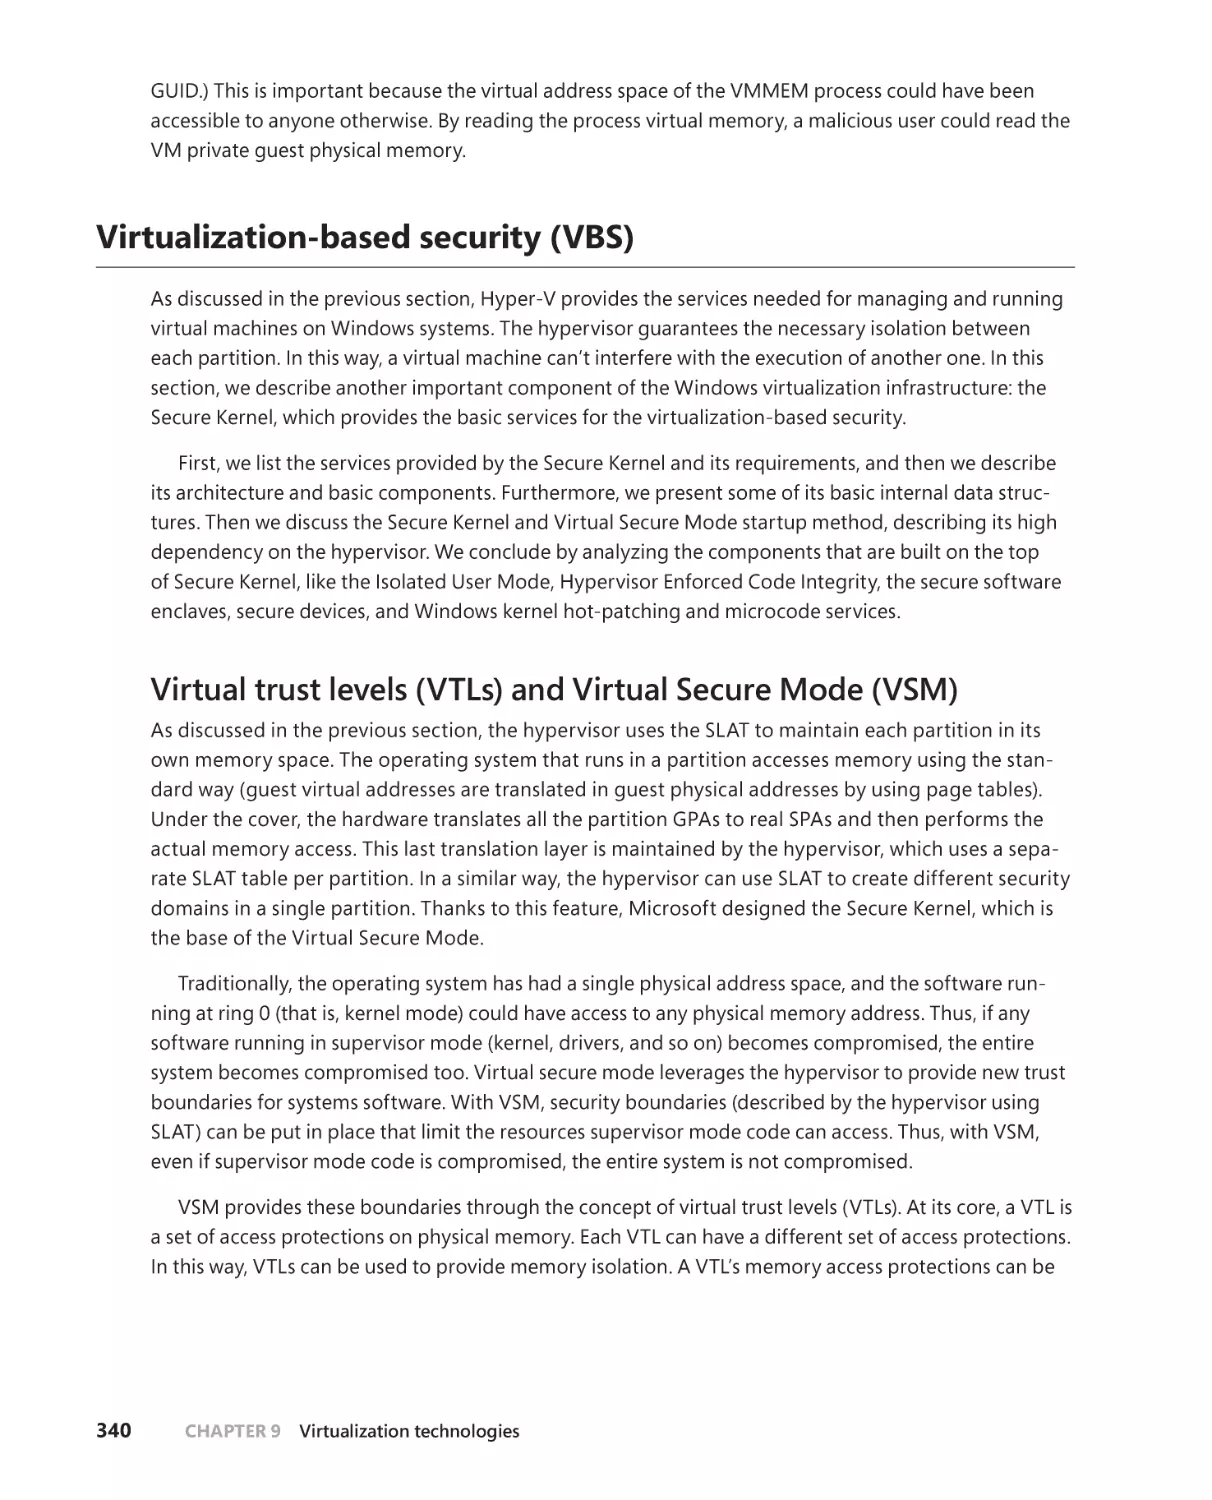 Virtualization-based security (VBS)
Virtual trust levels (VTLs) and Virtual Secure Mode (VSM)